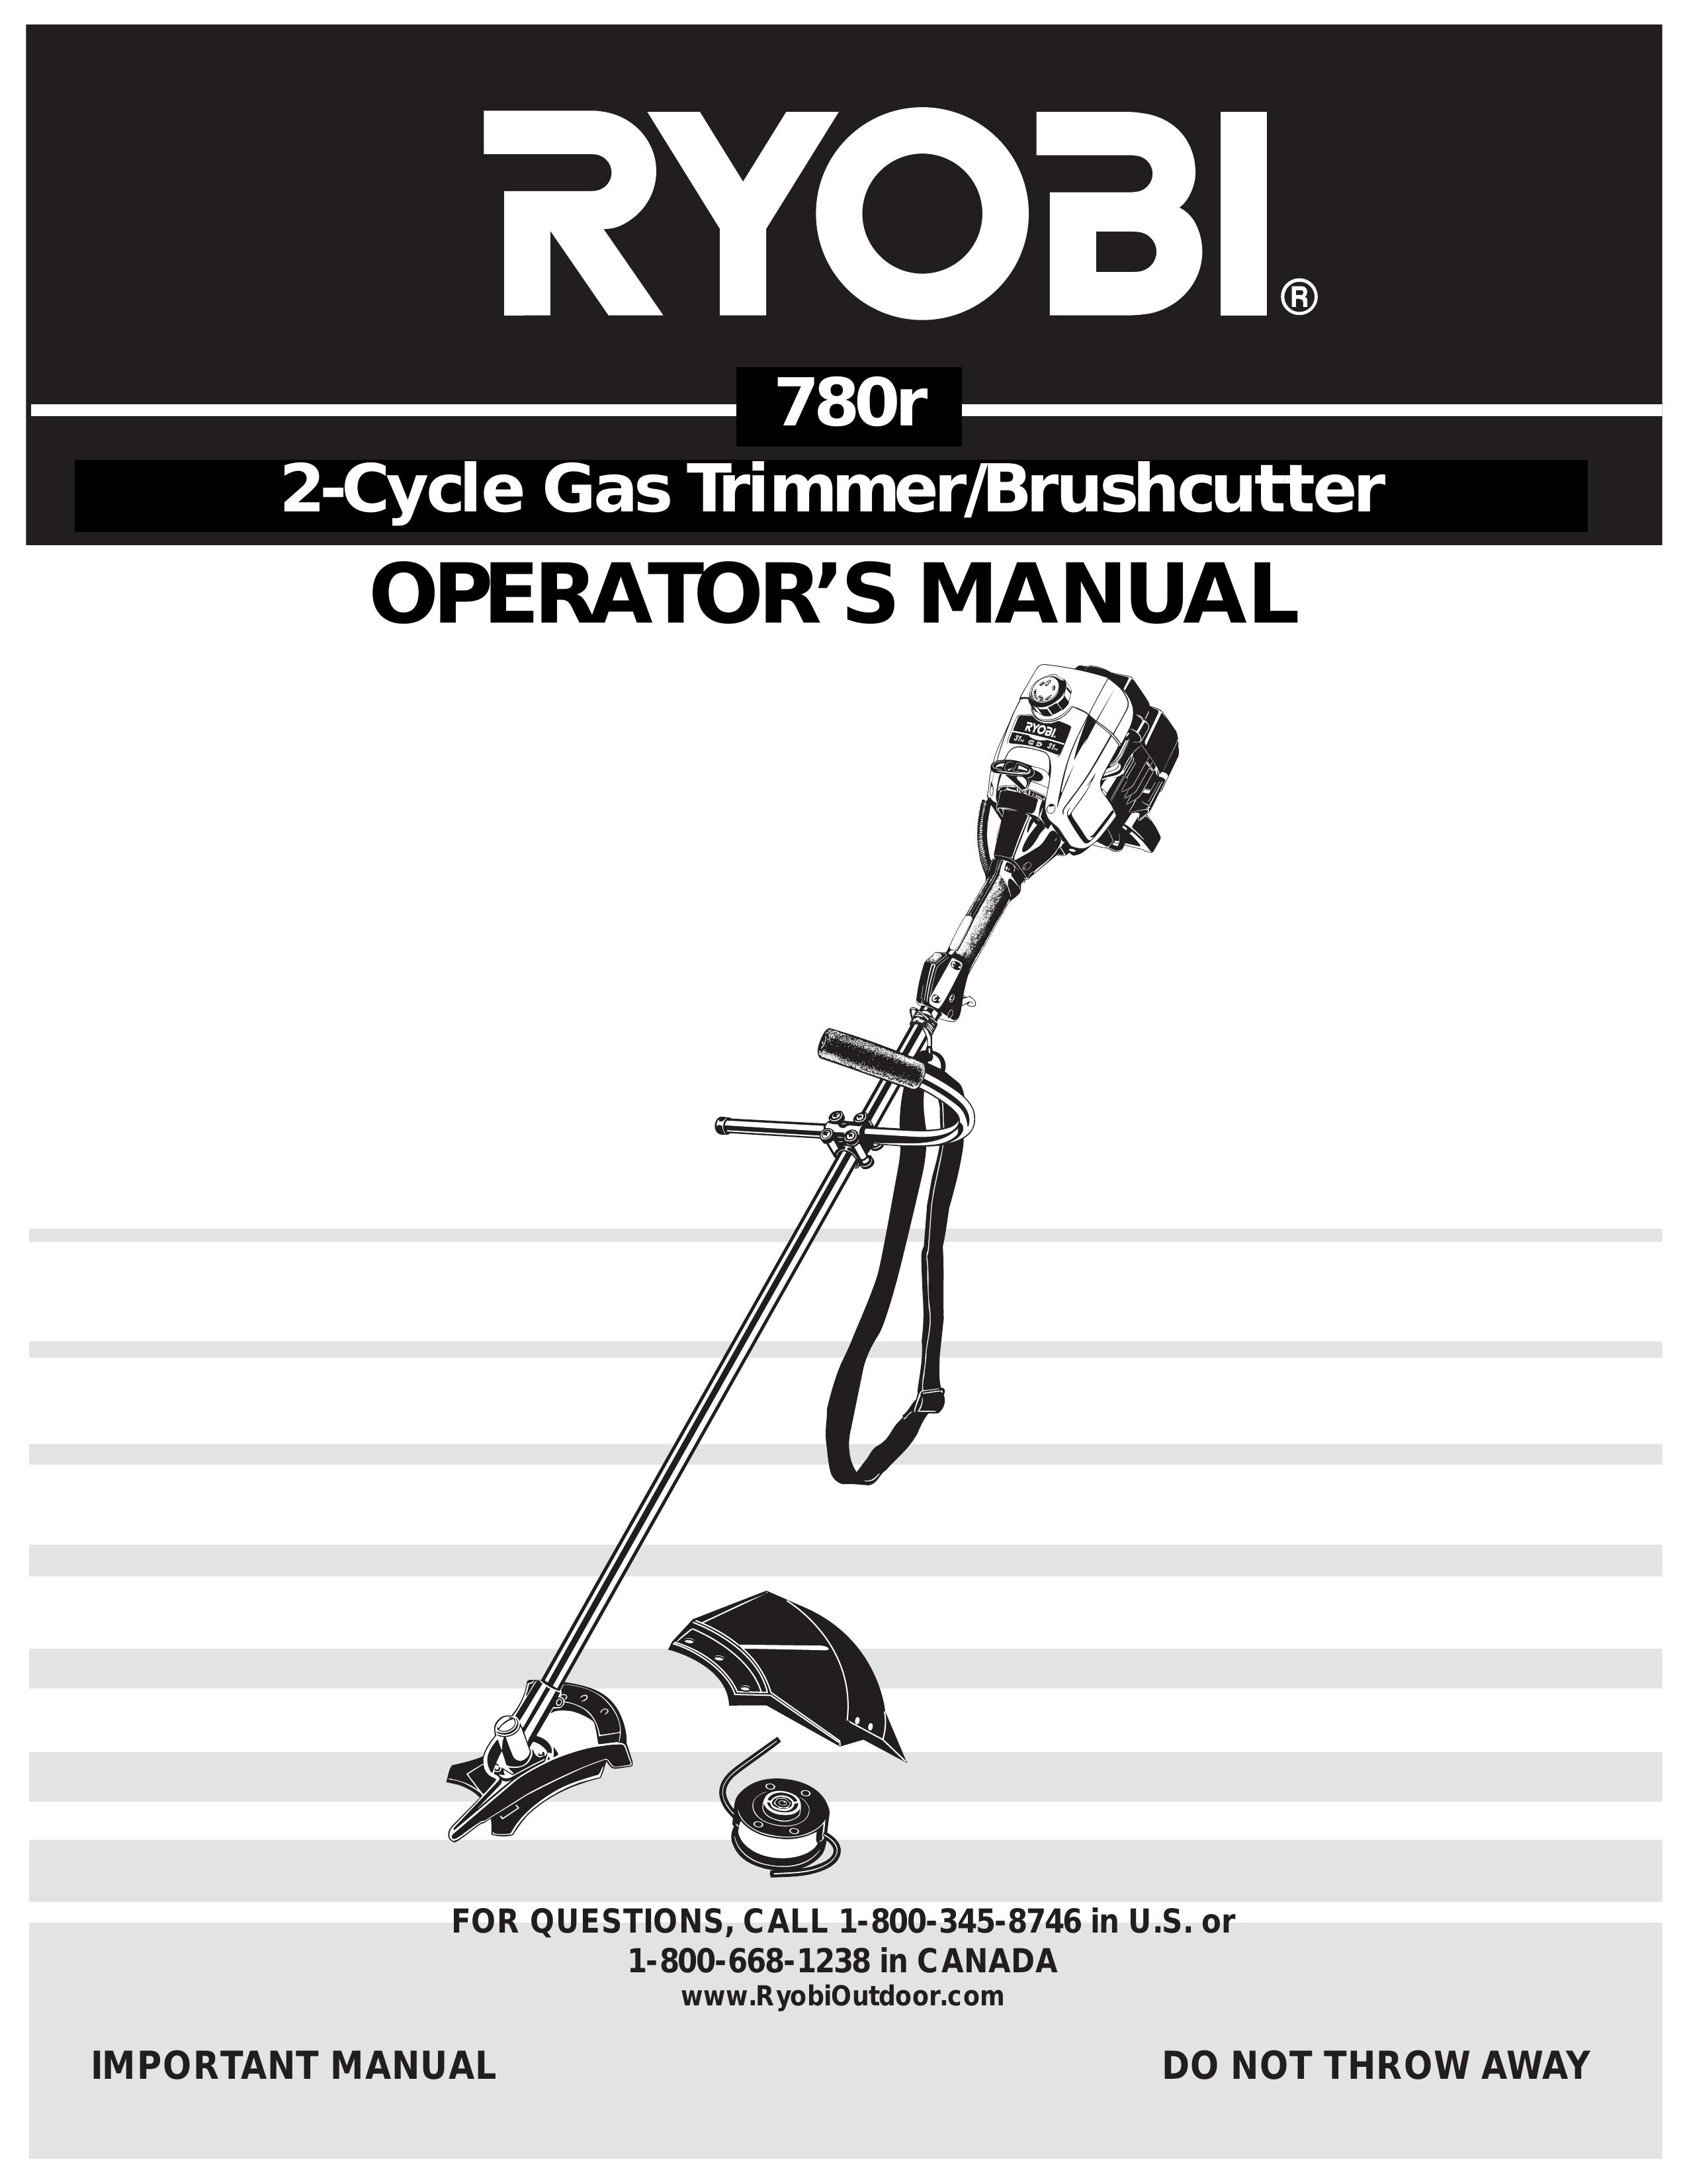 Ryobi 780r Trimmer User Manual